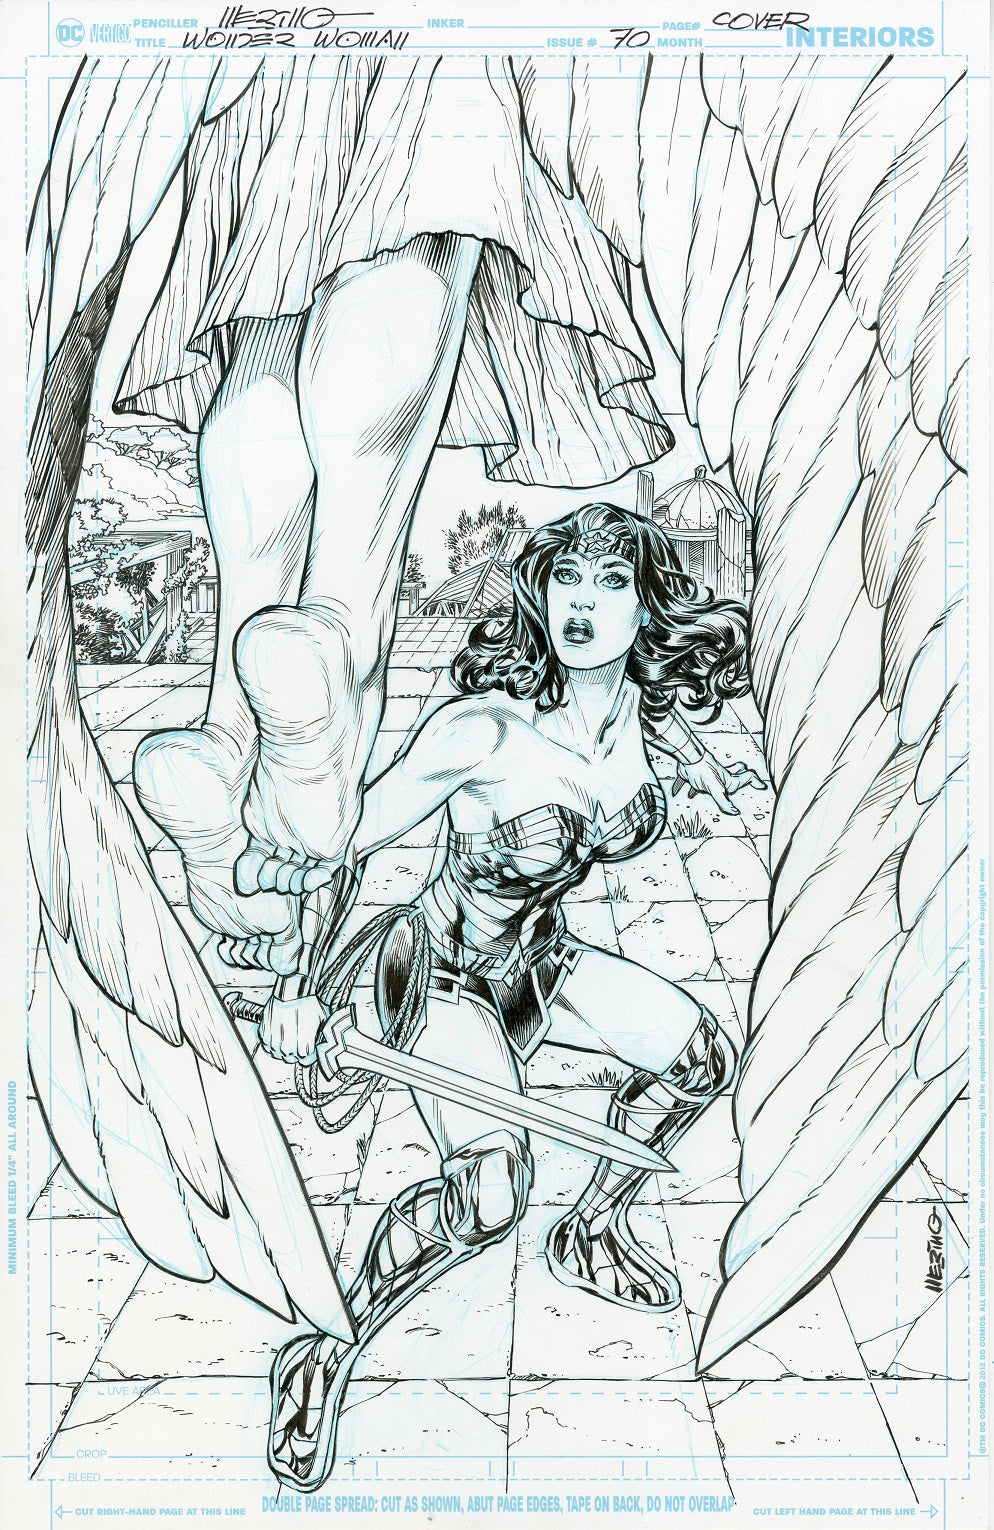 Jesus Merino Original Art Wonder Woman #70 Cover